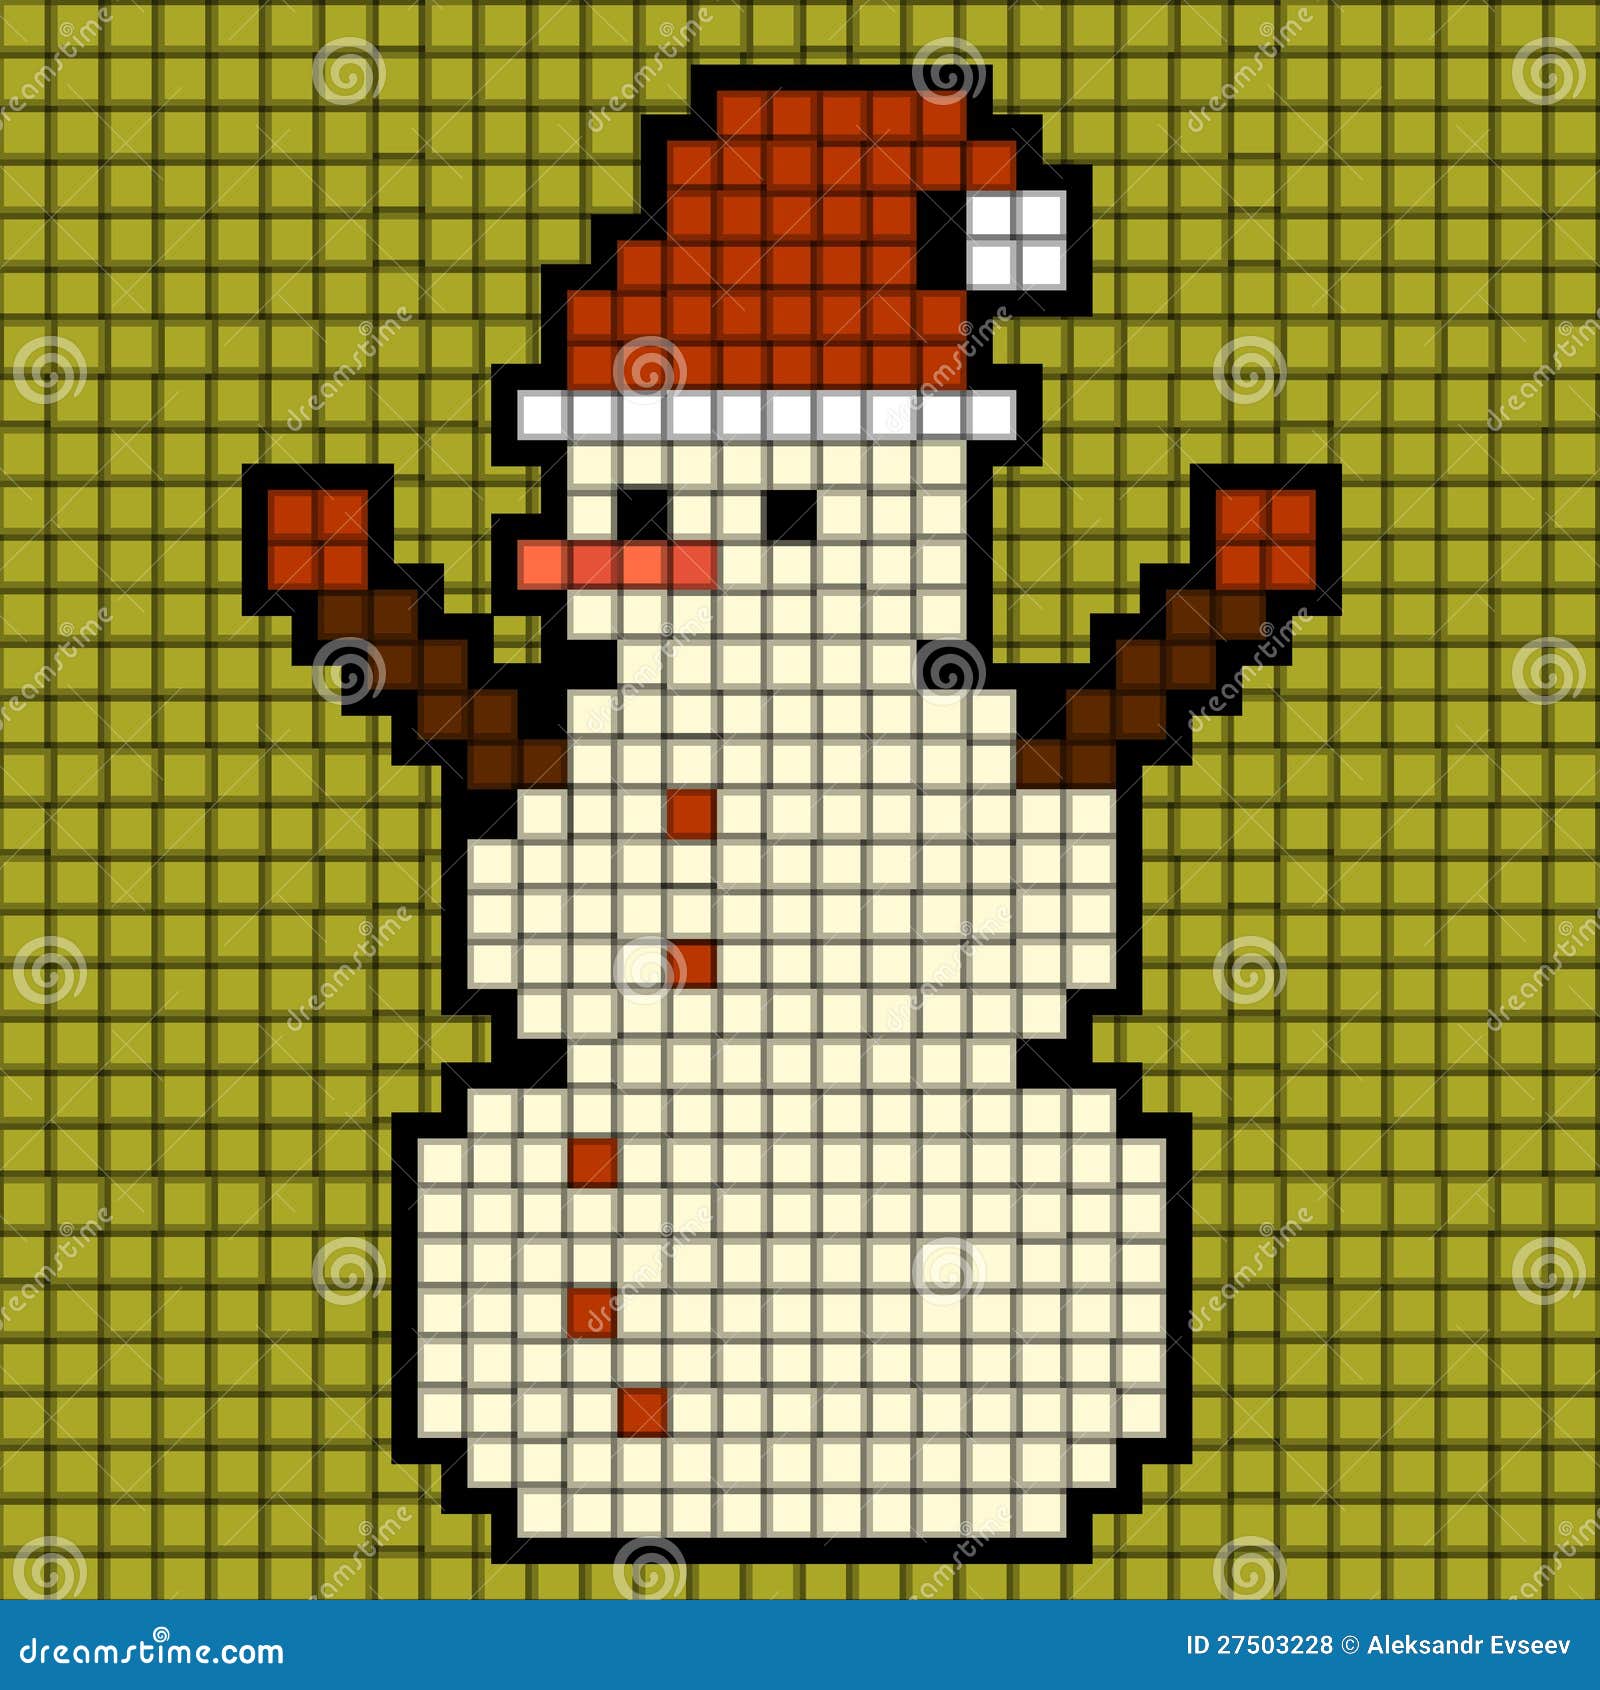 [Image: pixel-snowman-27503228.jpg]